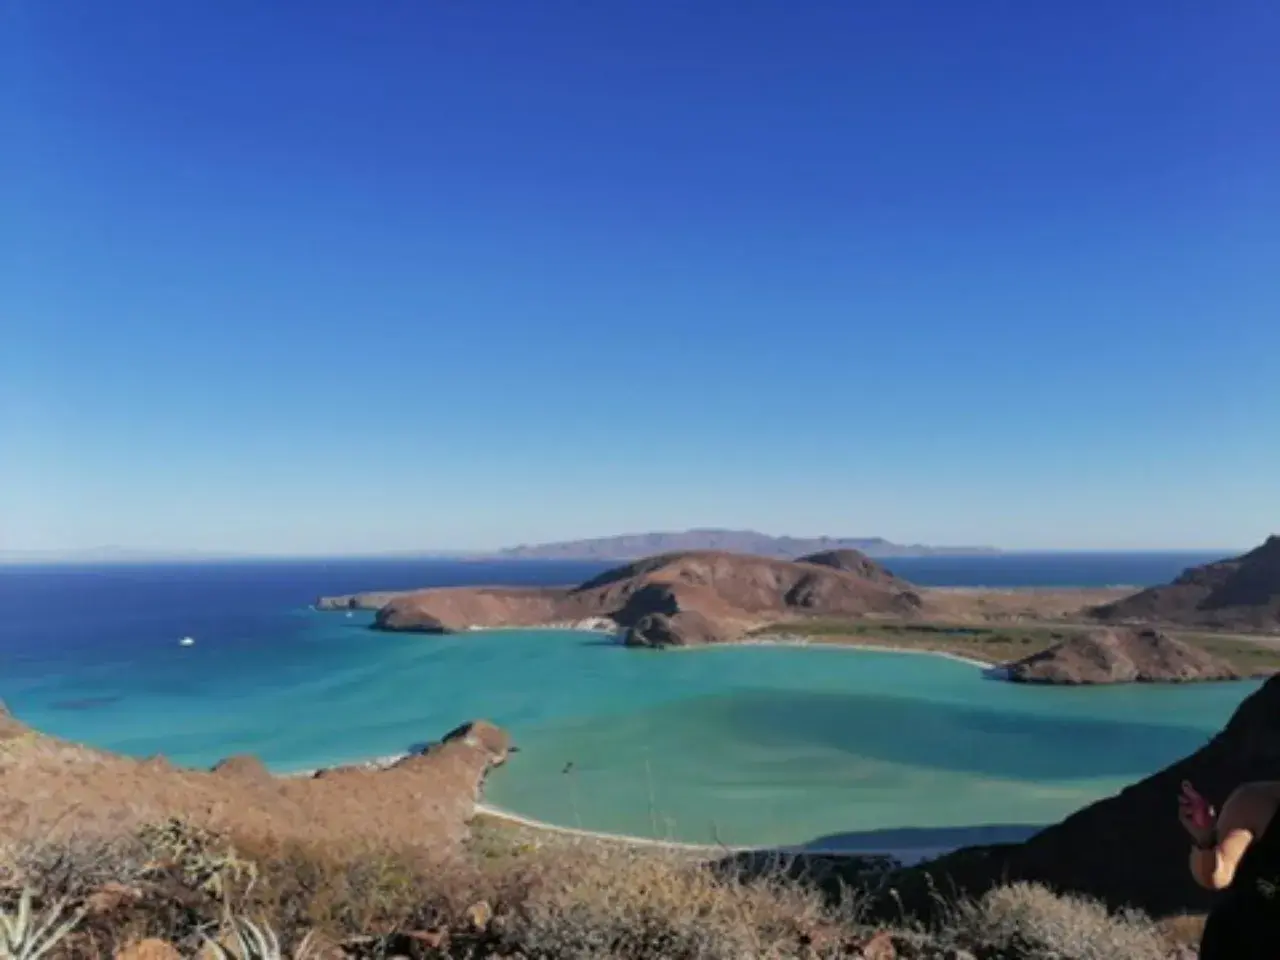 Seas and hills, the privileged geography of La Paz, Baja California.